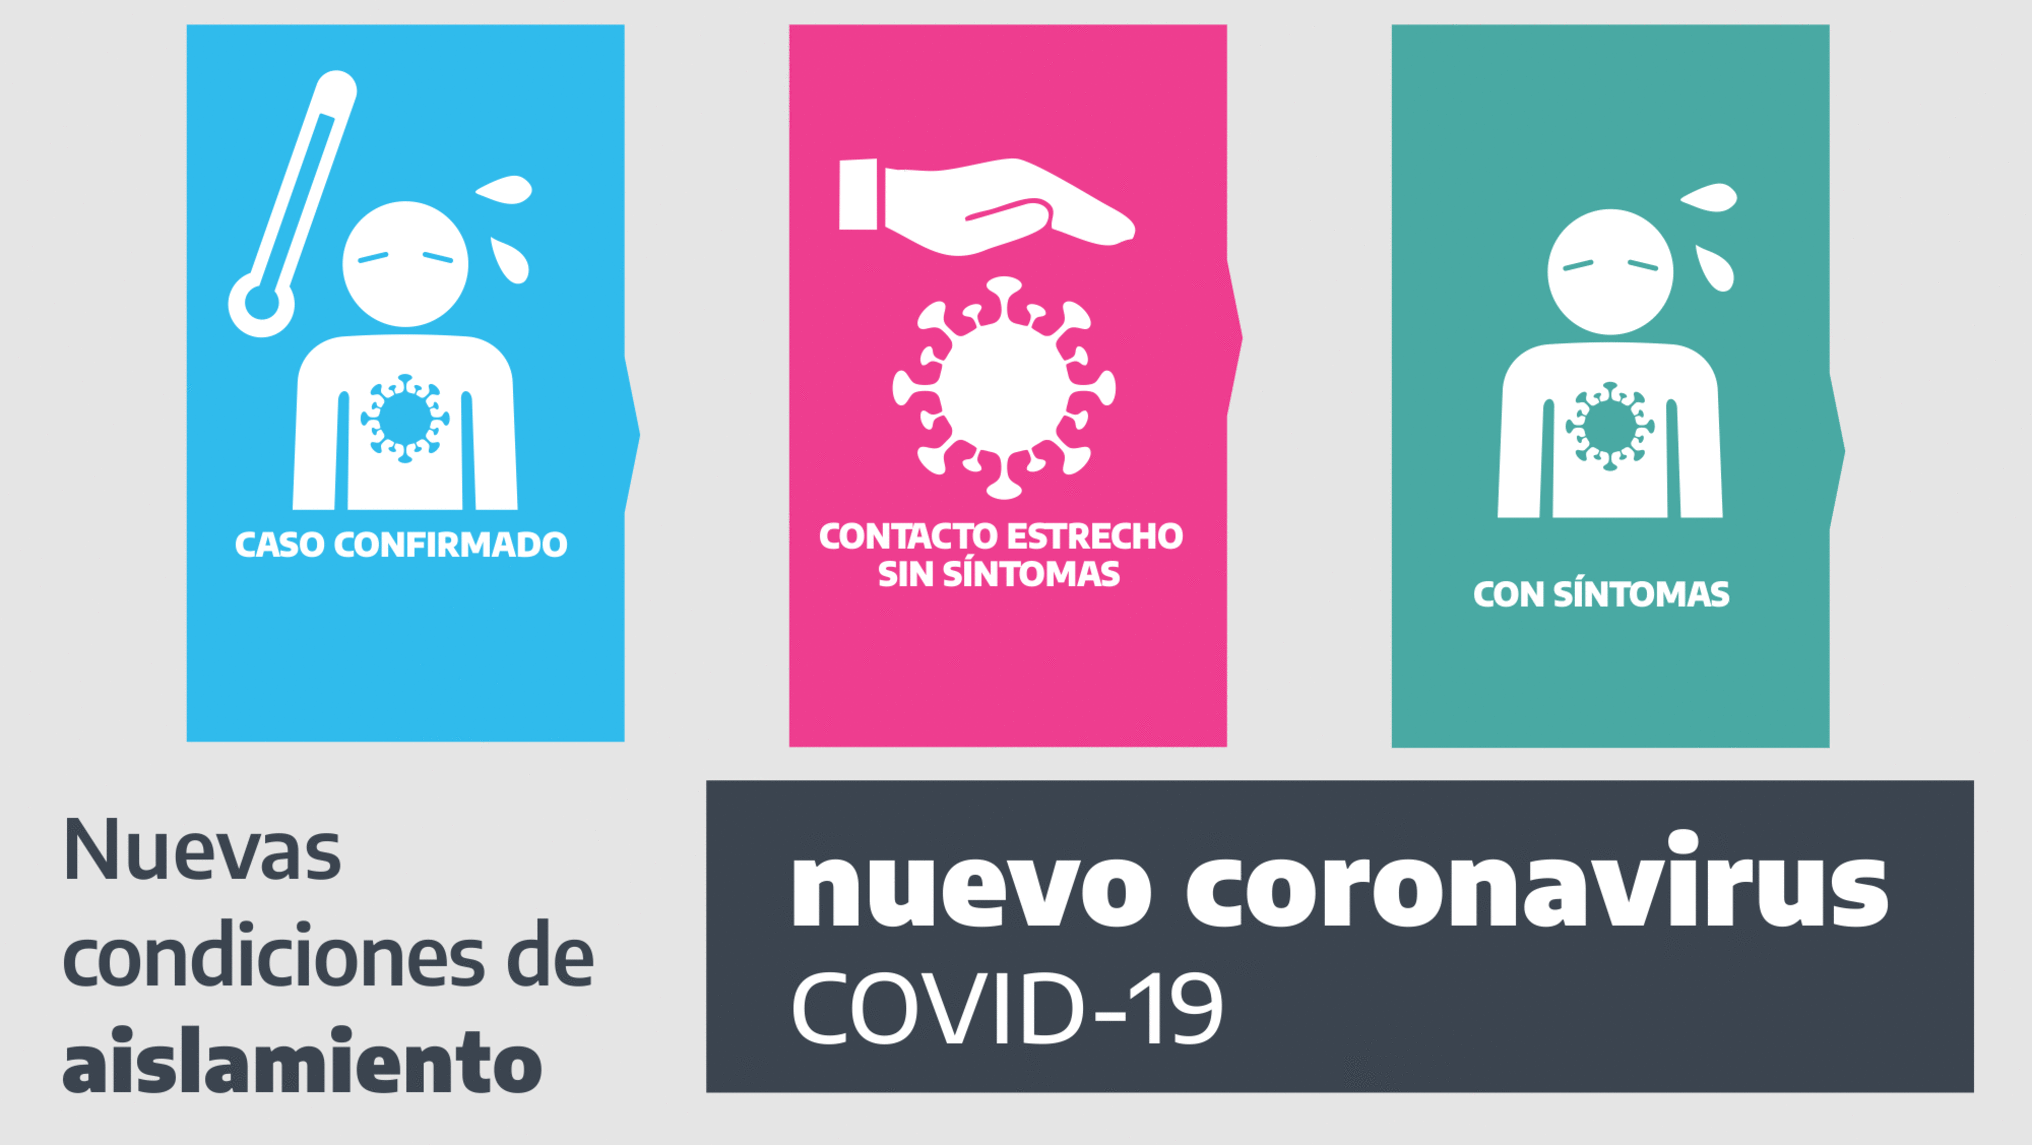 Nuevo coronavirus COVID-19